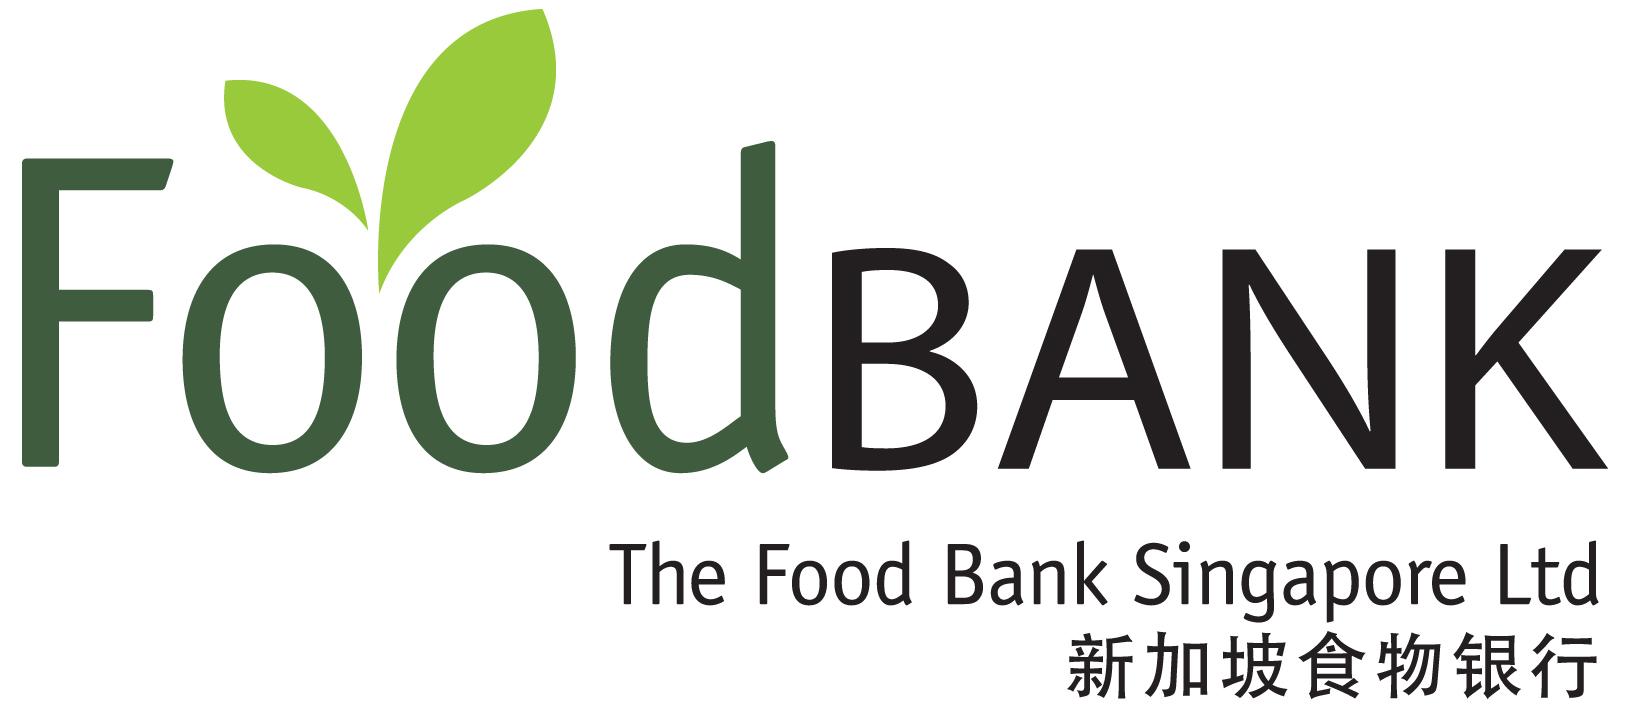 The Food Bank Singapore Ltd. company logo